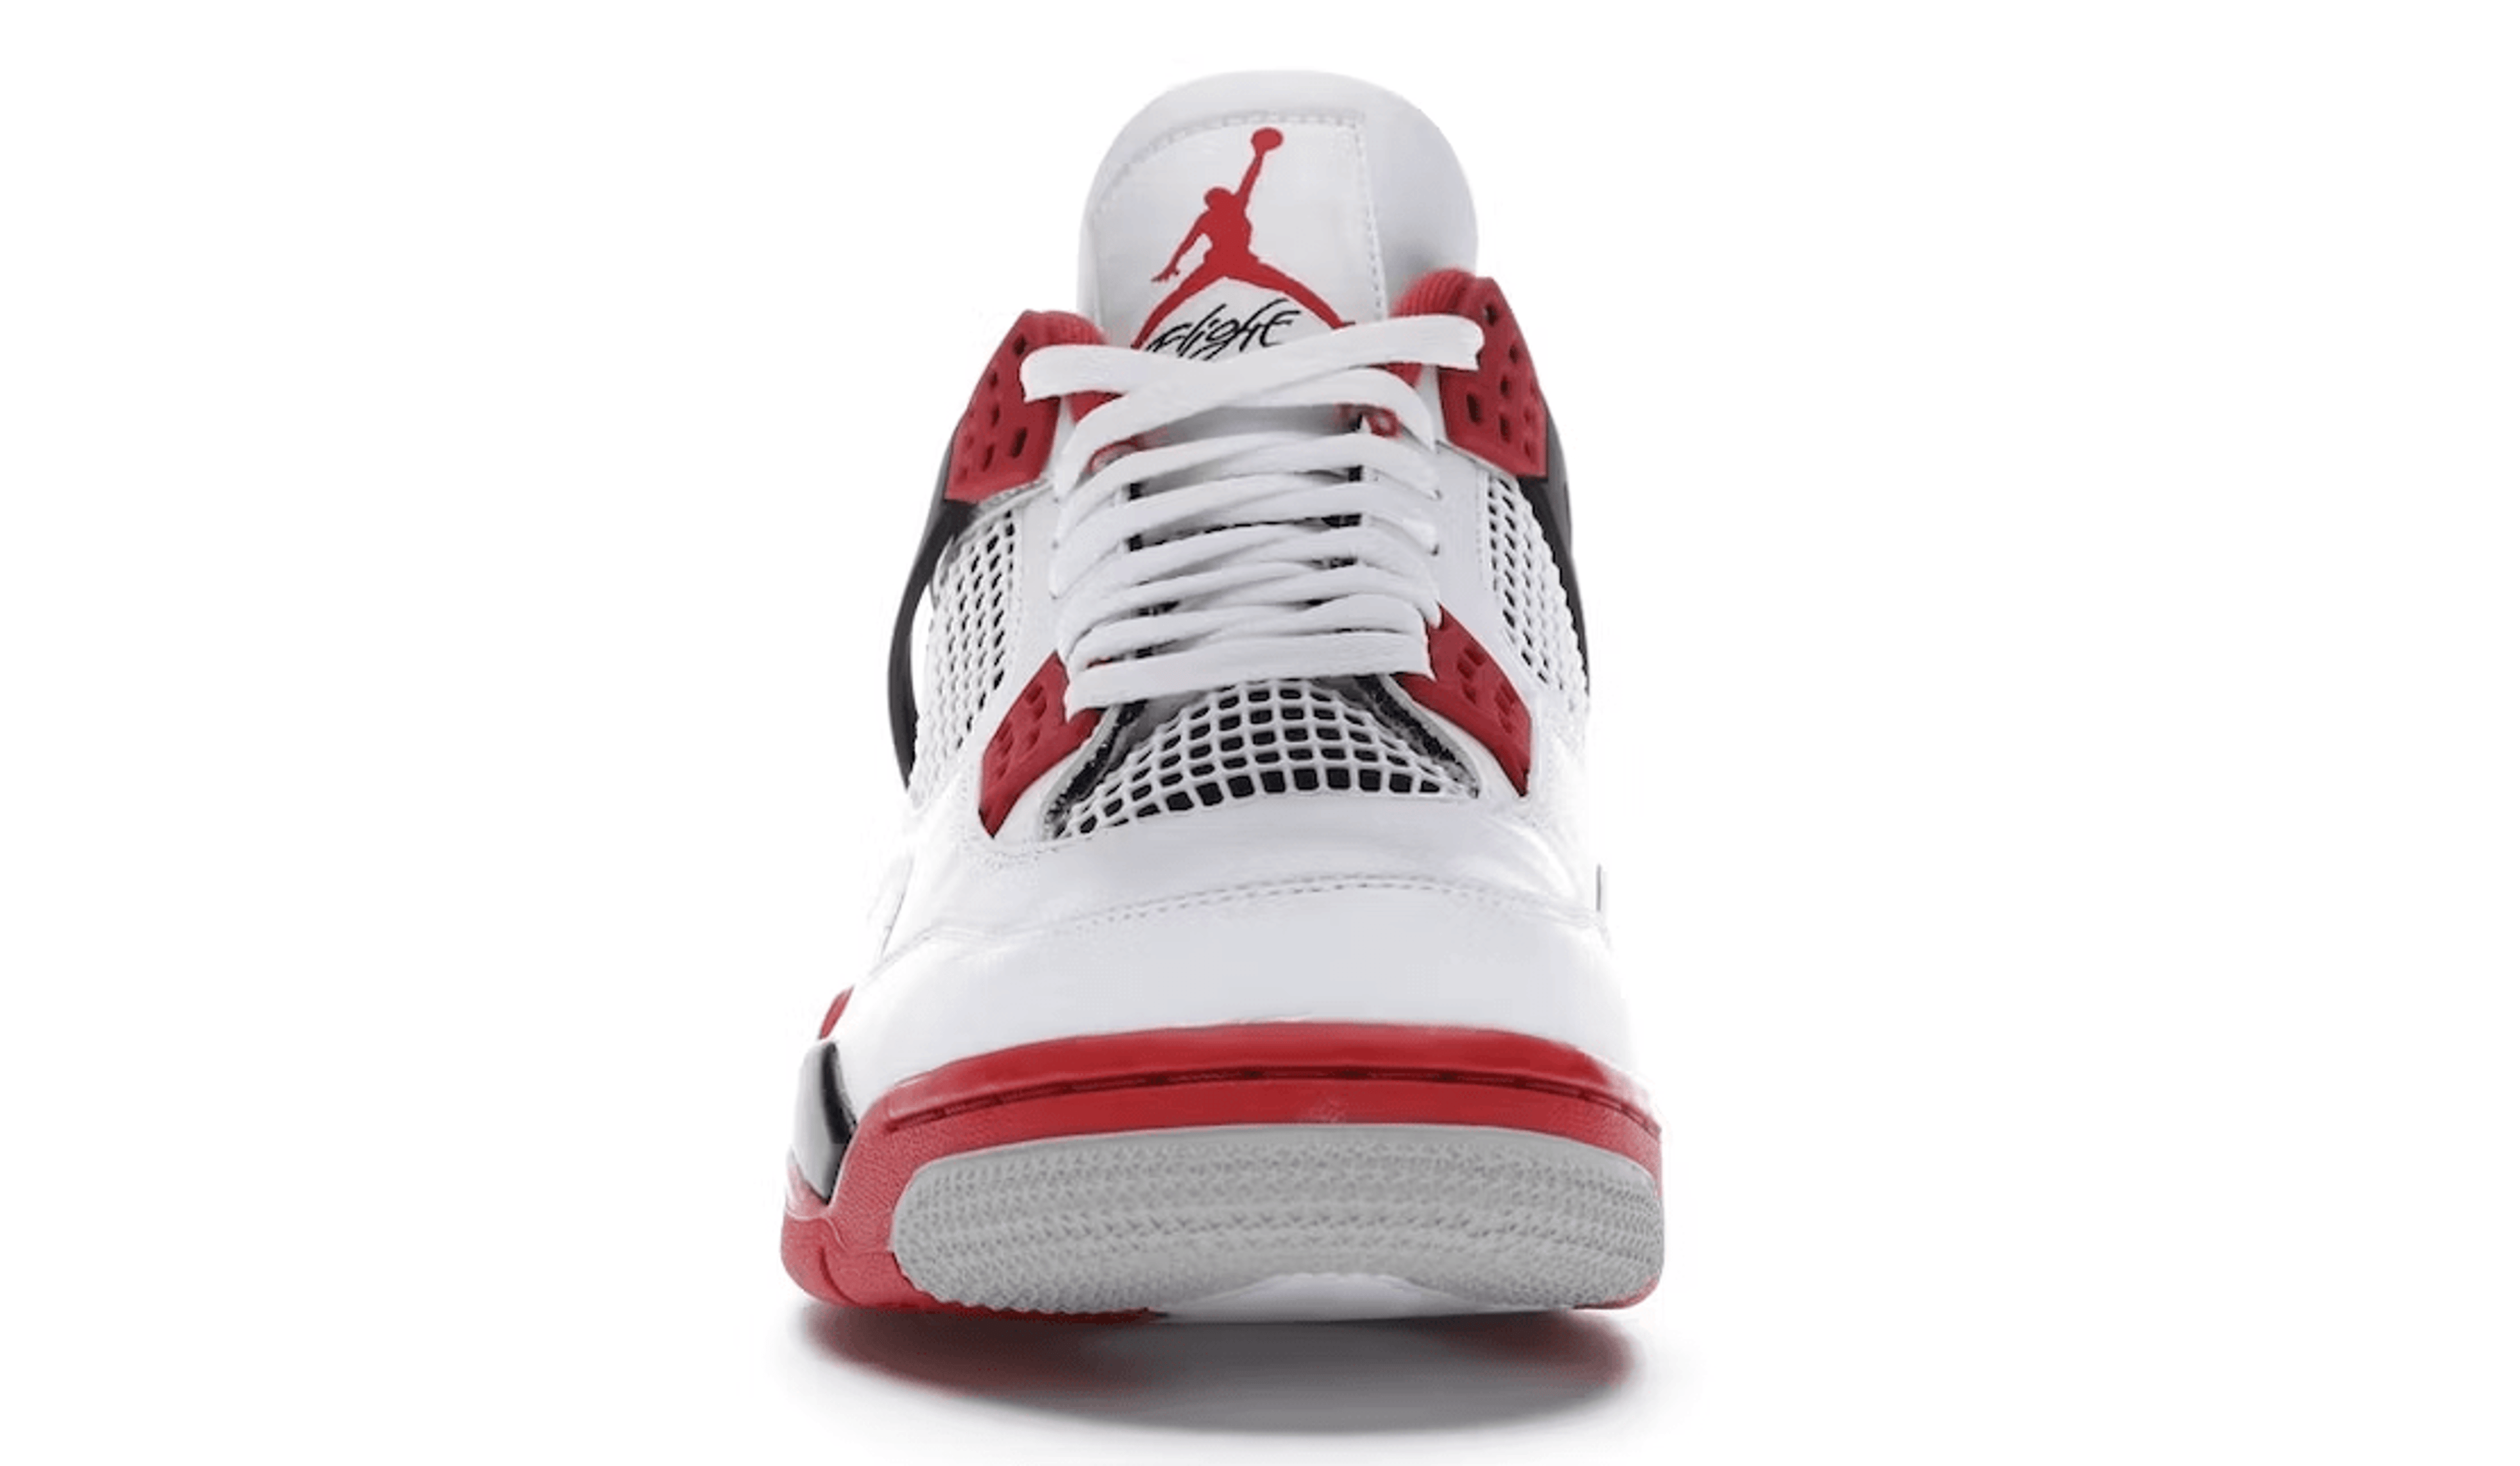 Alternate View 2 of Air Jordan 4 Retro Fire Red (2020)